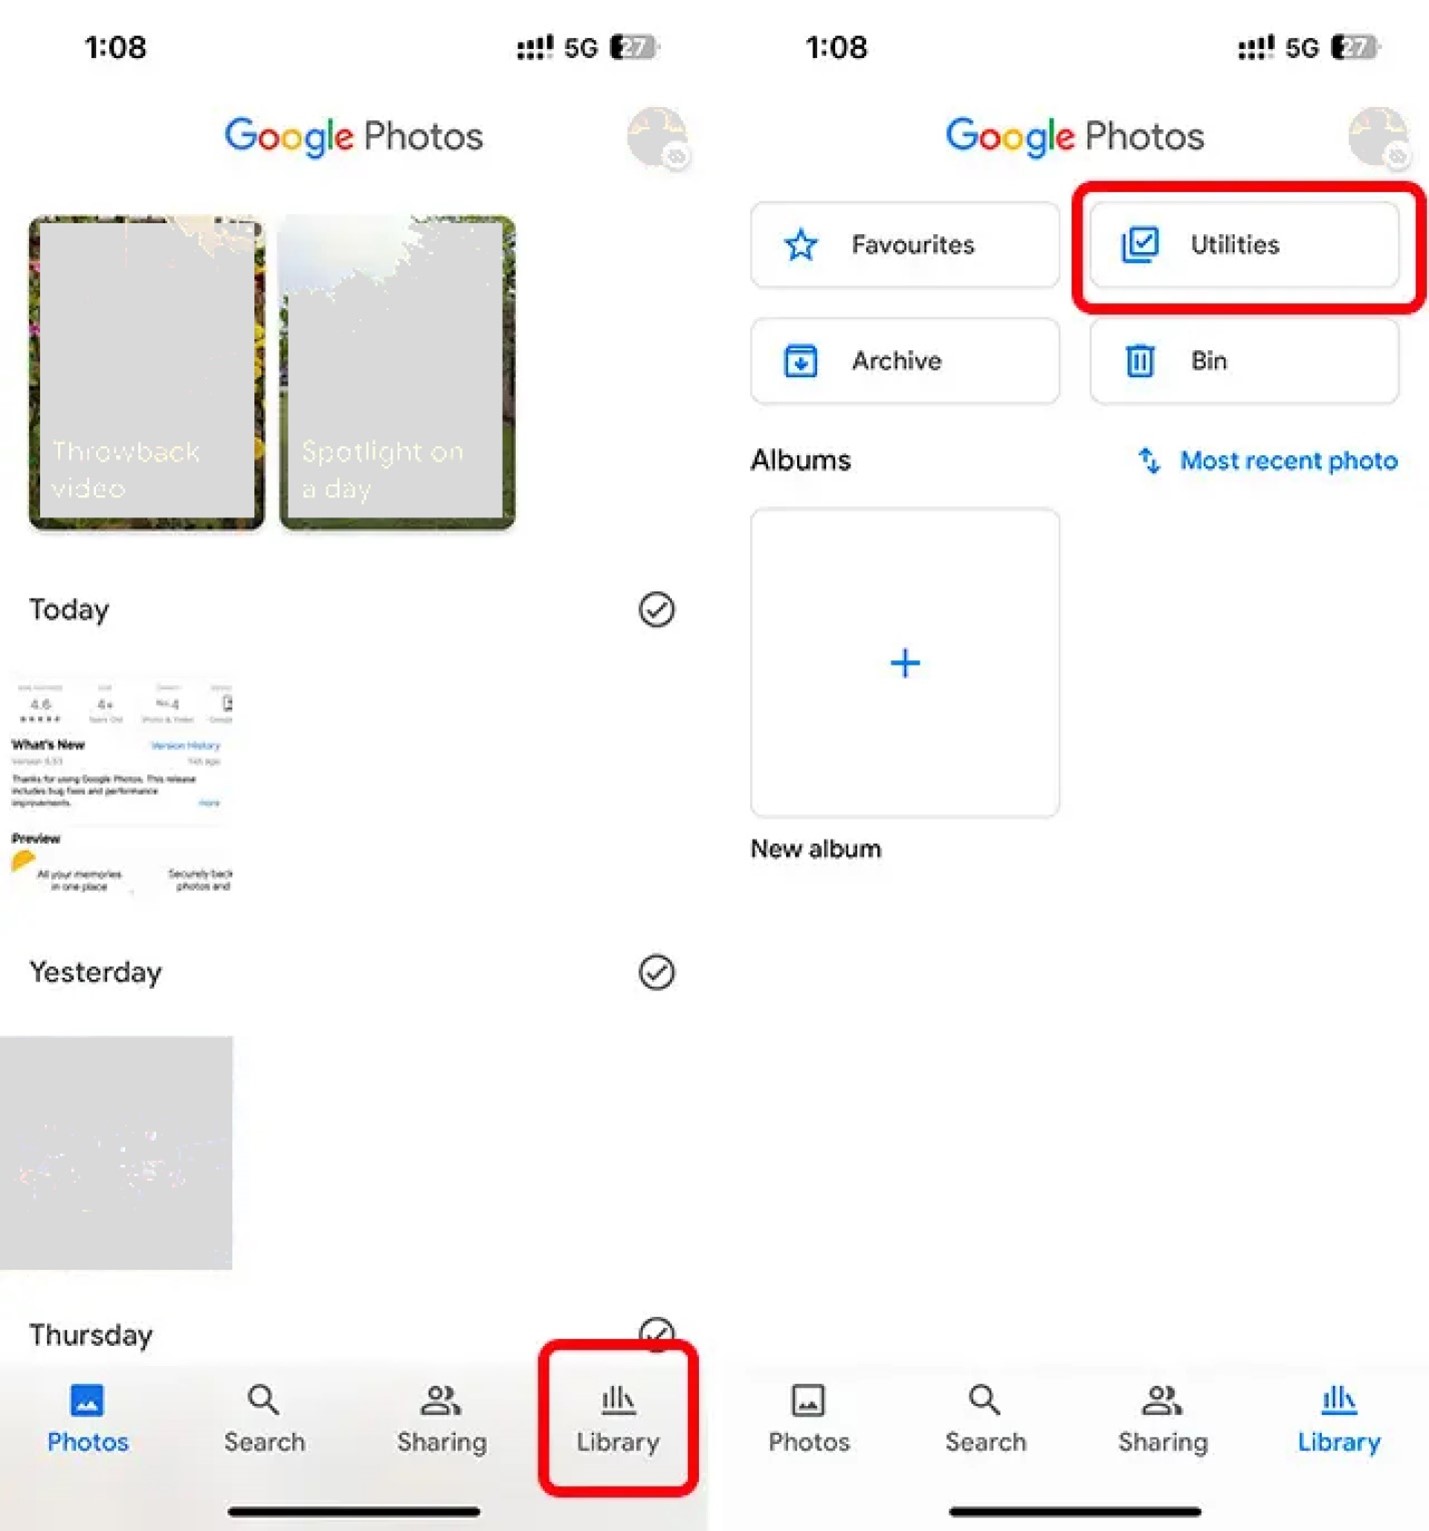 navigate to google photos app and choose utilities